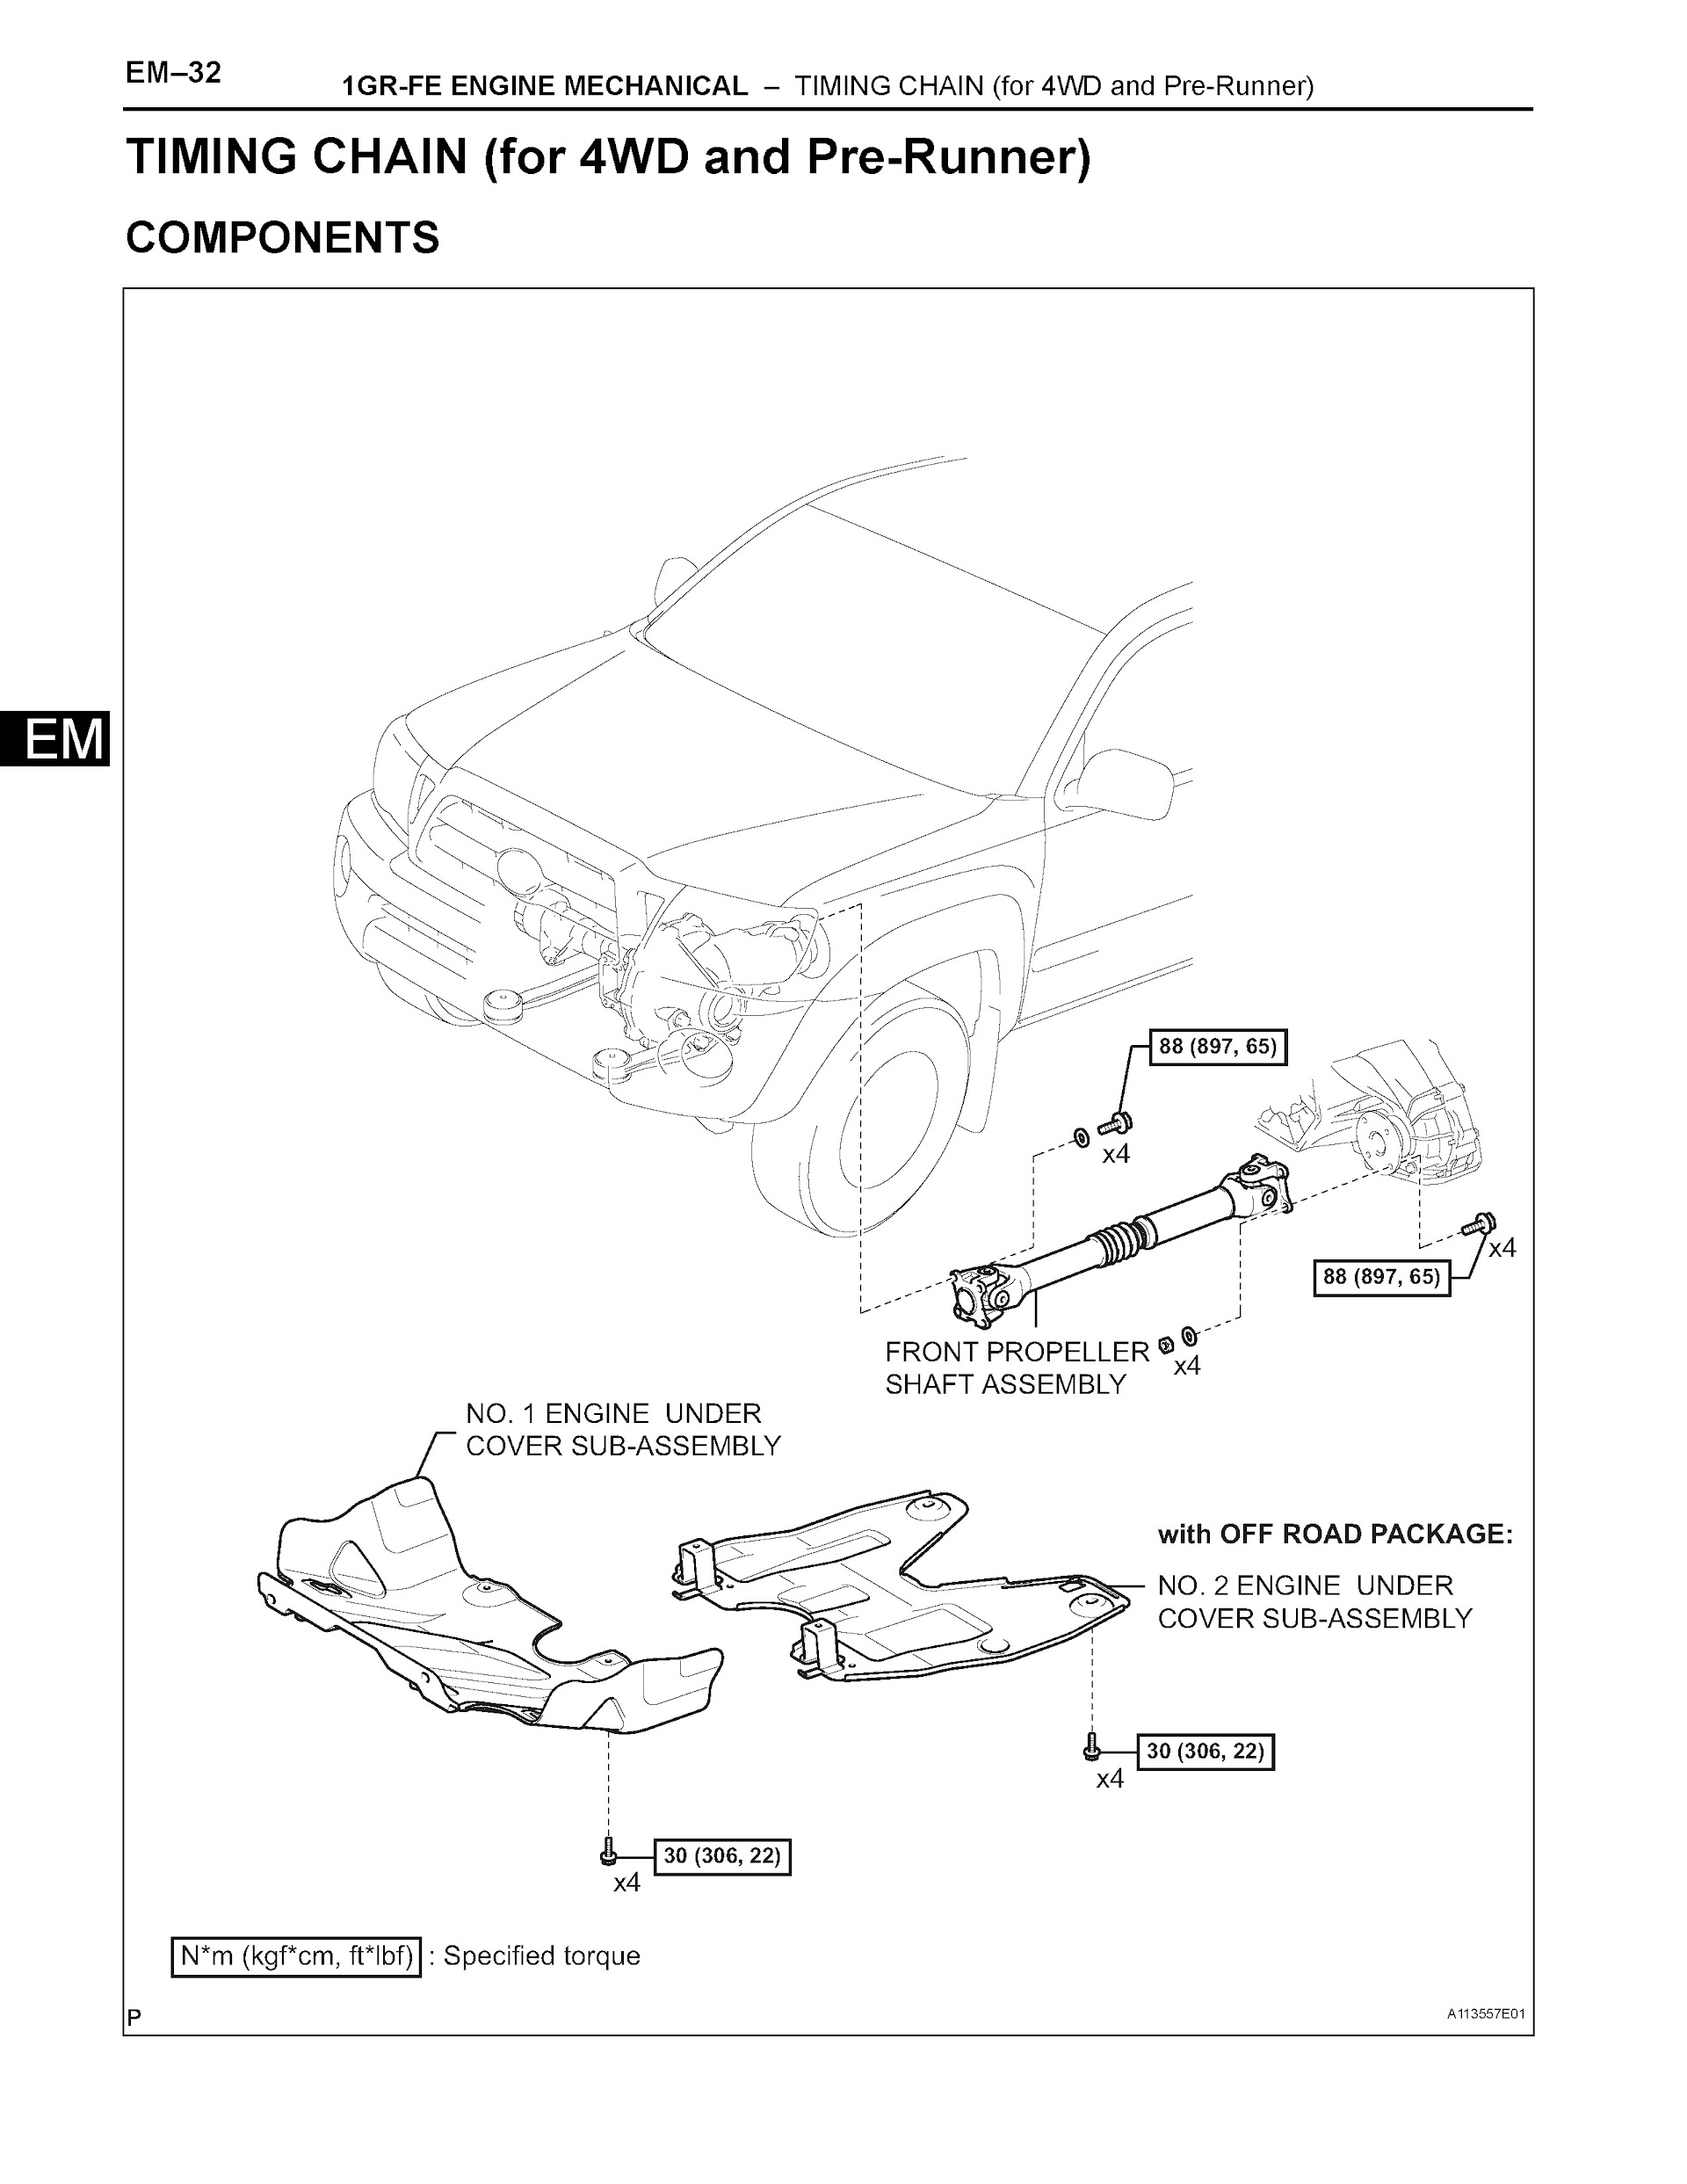 2008 Toyota Tacoma Repair Manual, 1GR-FE Timing Chain